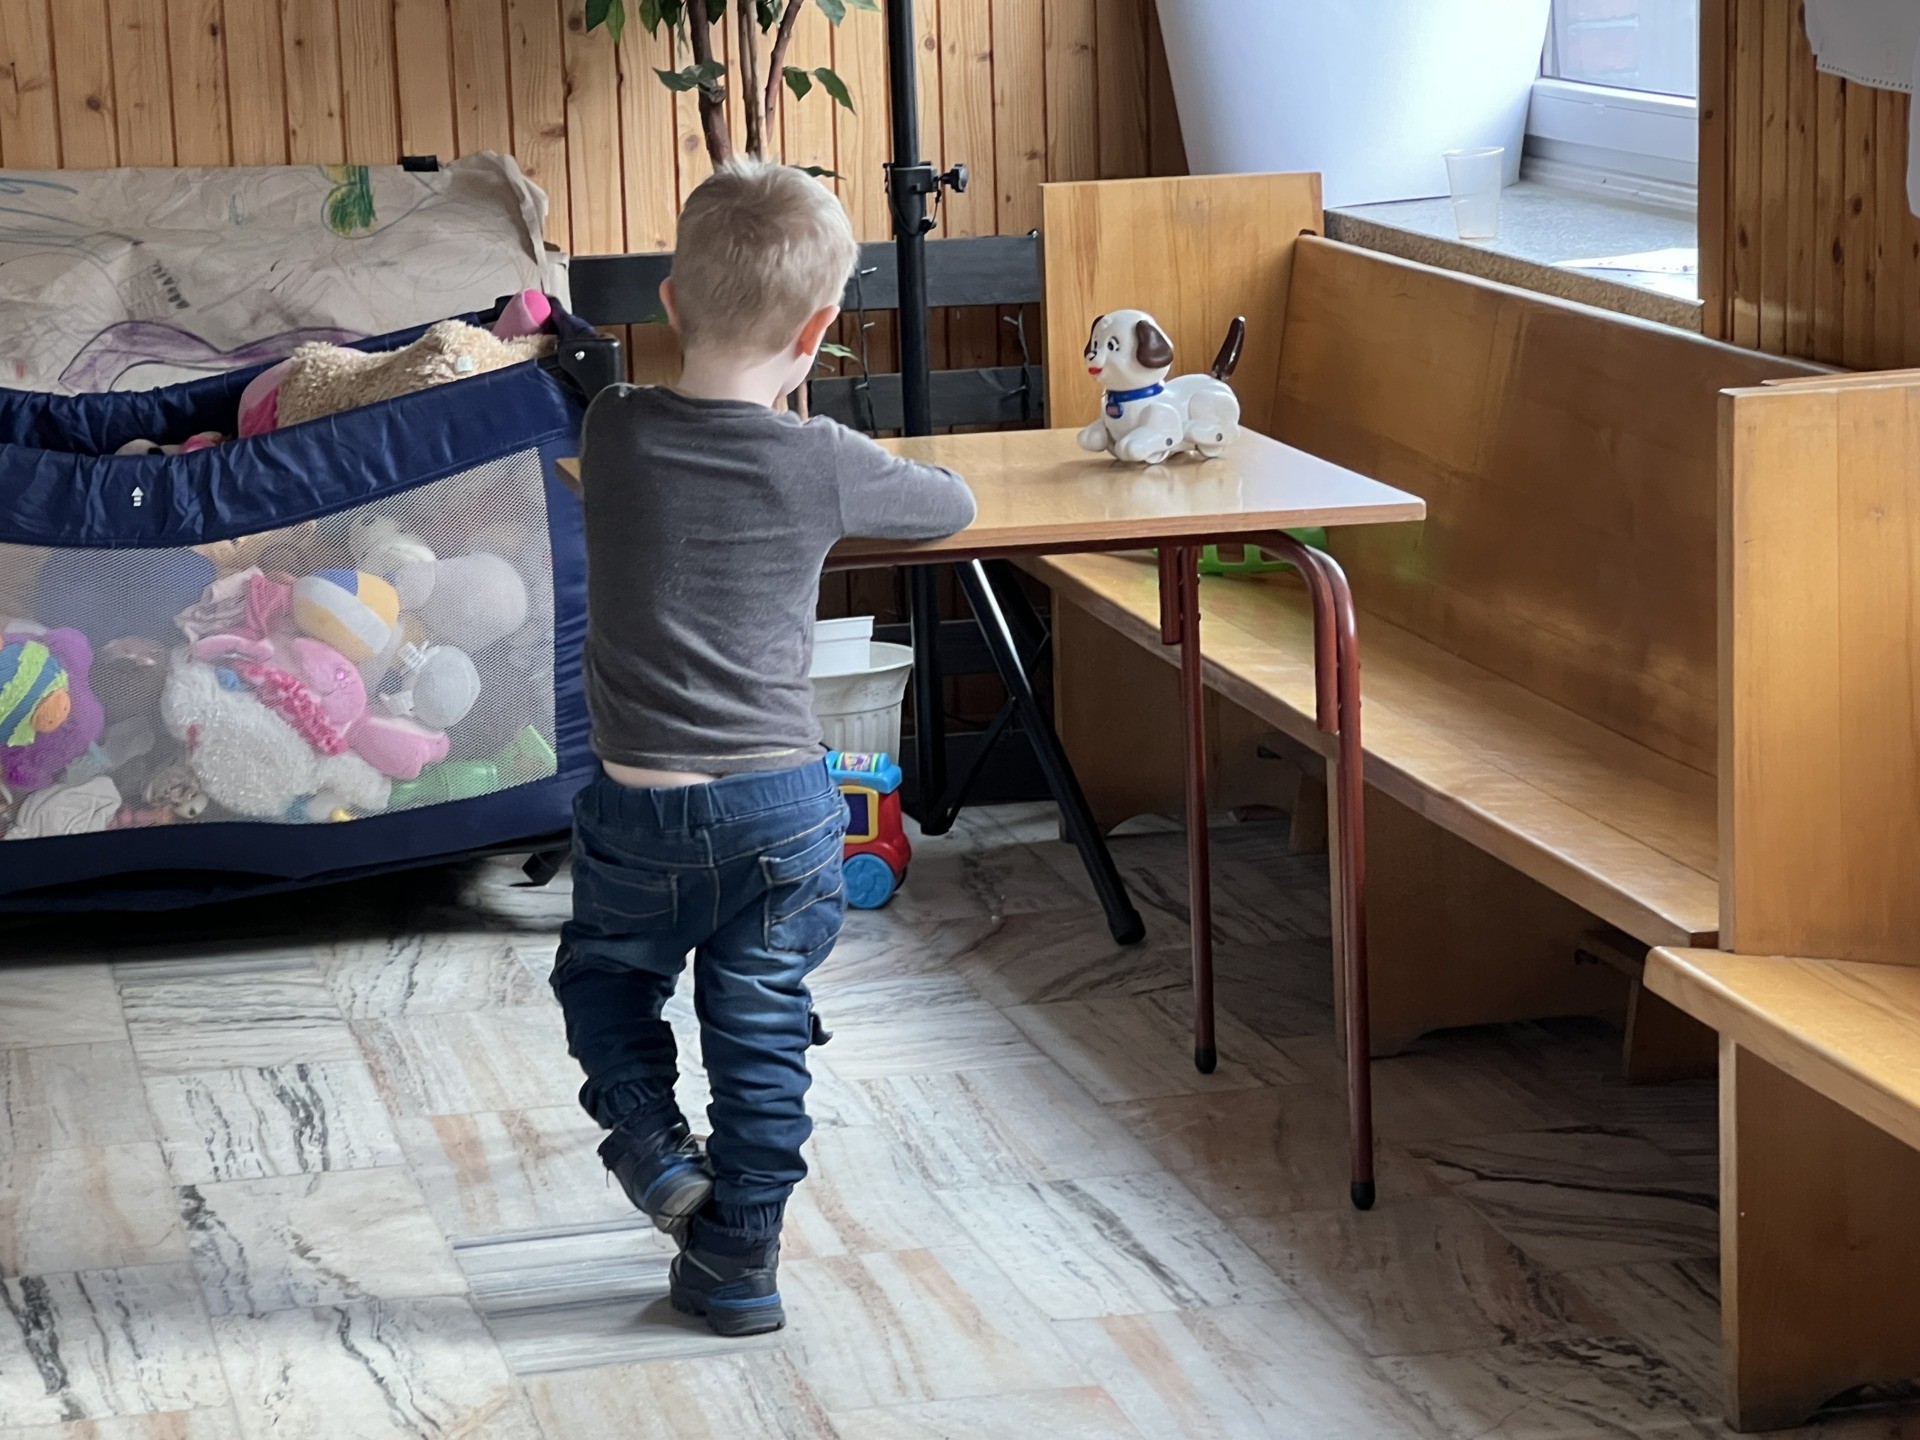 Ukrainian refugee boy playing (Kristina Wong/Breitbart News)